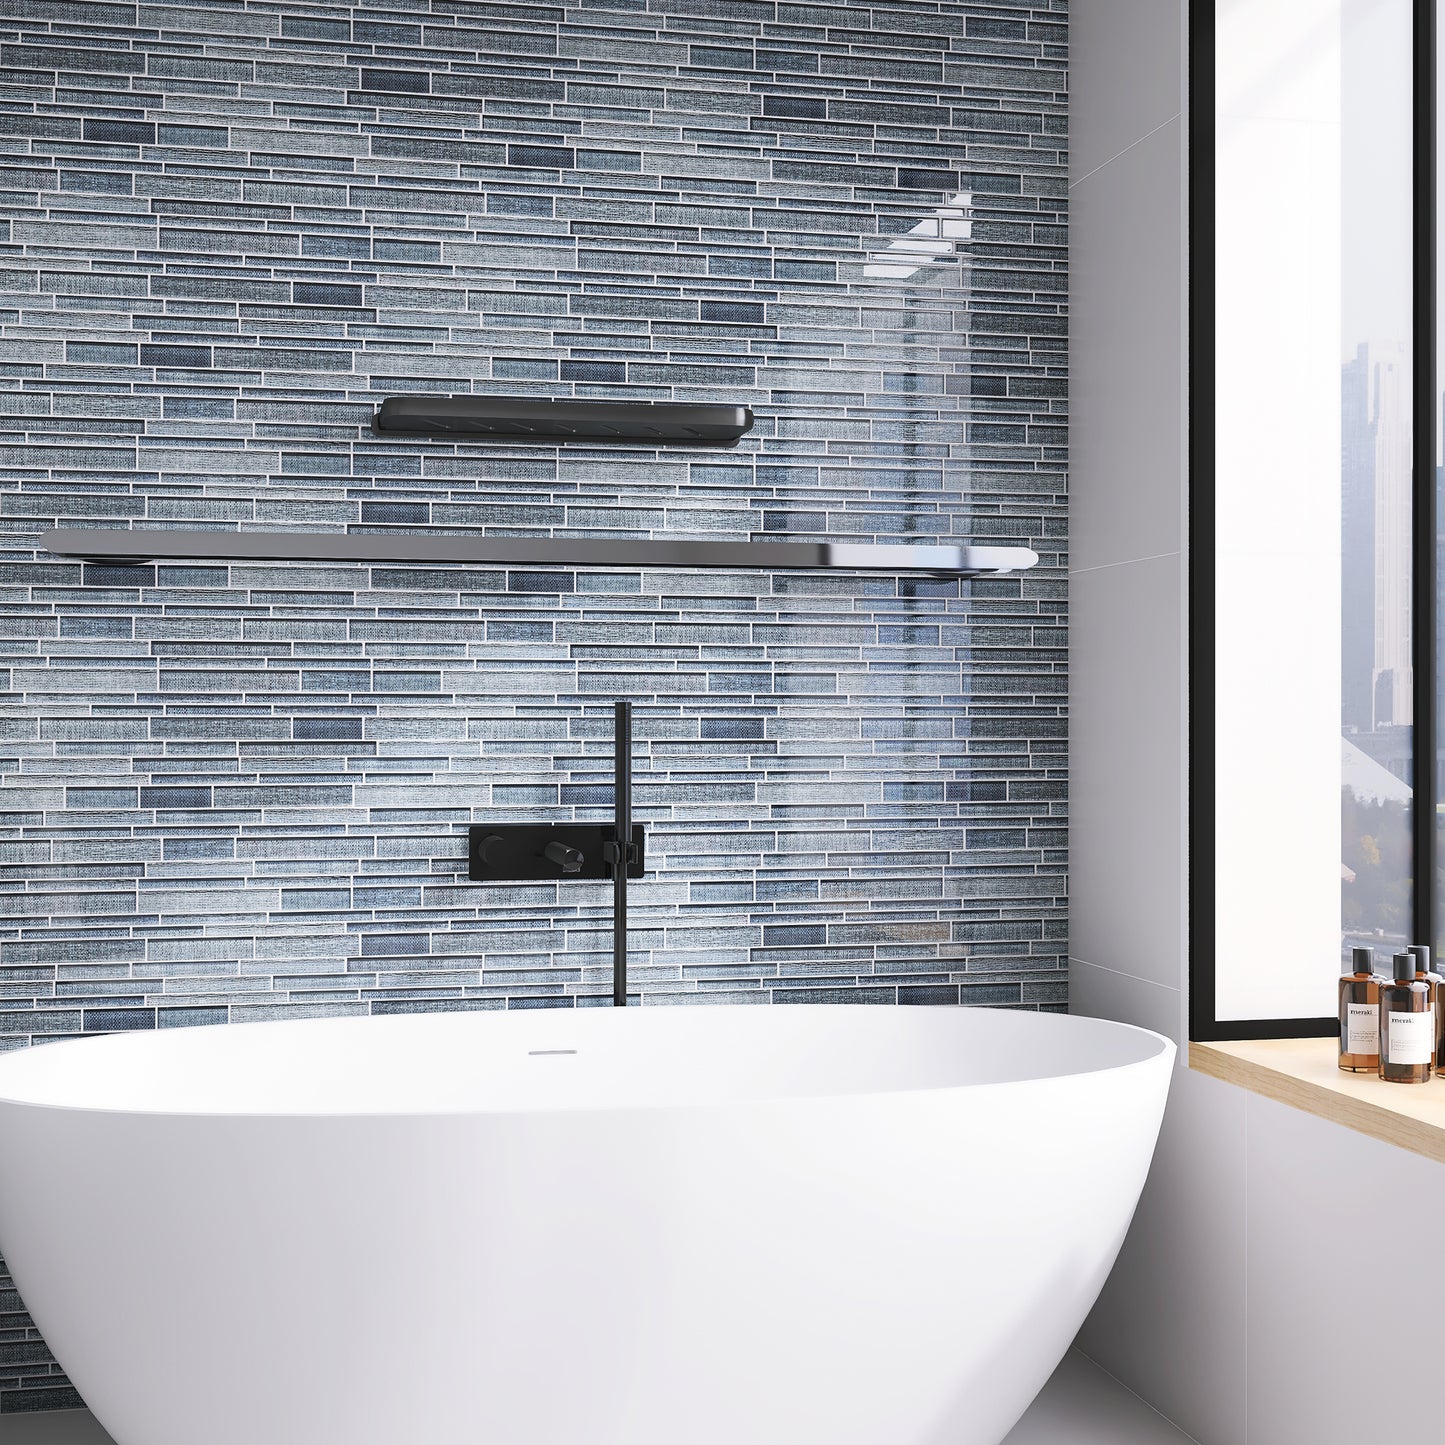  Linear Glass Wall Backsplash Tiles